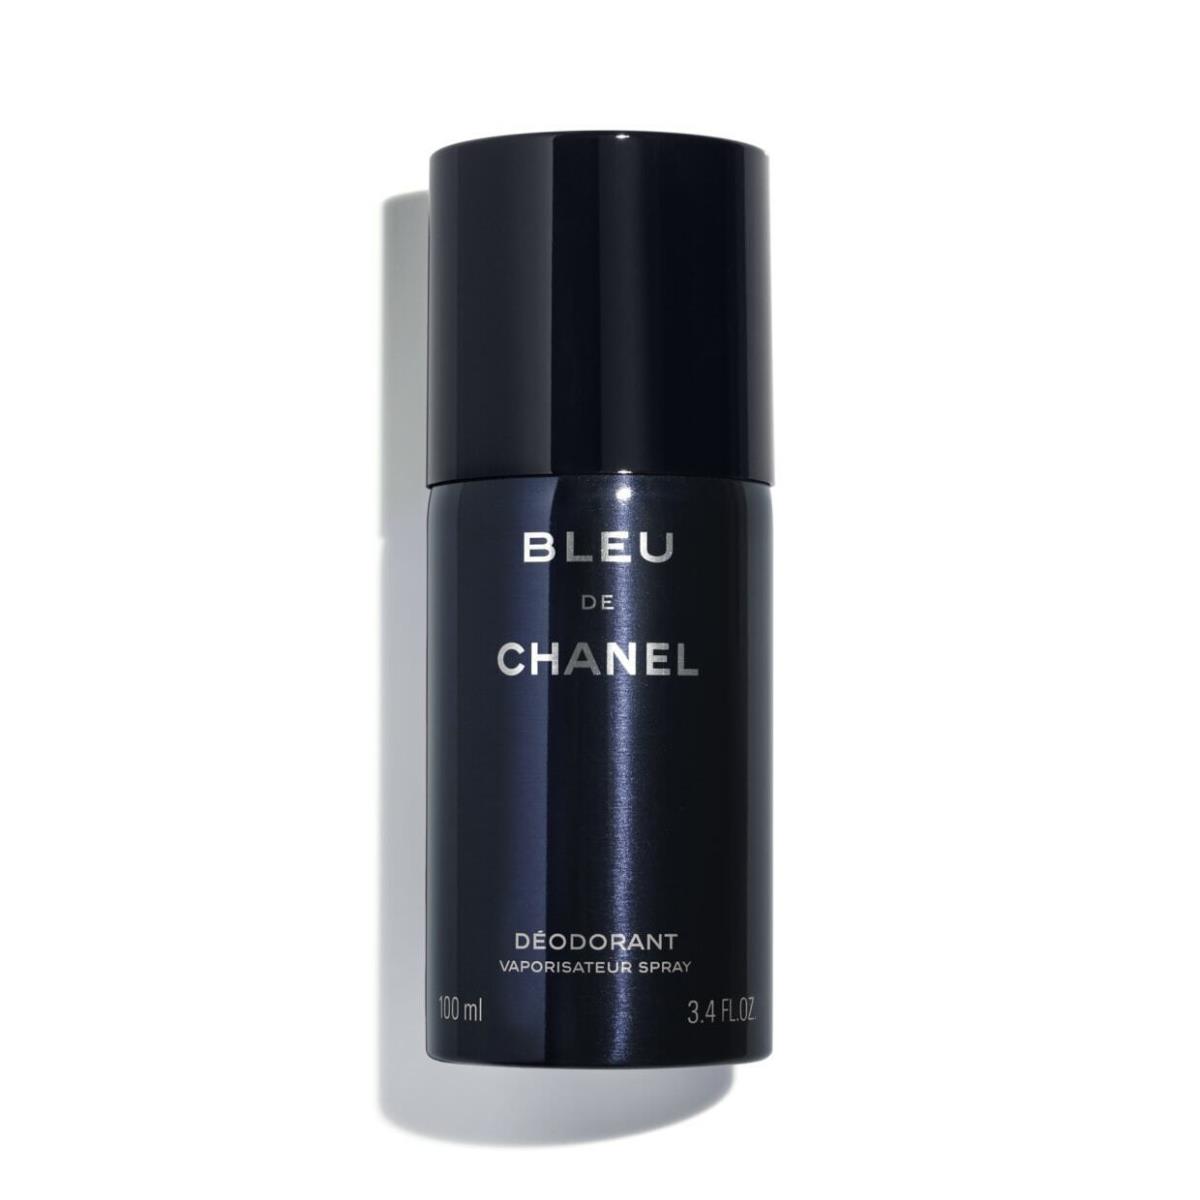 Bleu Chanel Men Deodorant Body Spray+ Fragrance Sample Gift+pouch Bag Christmas